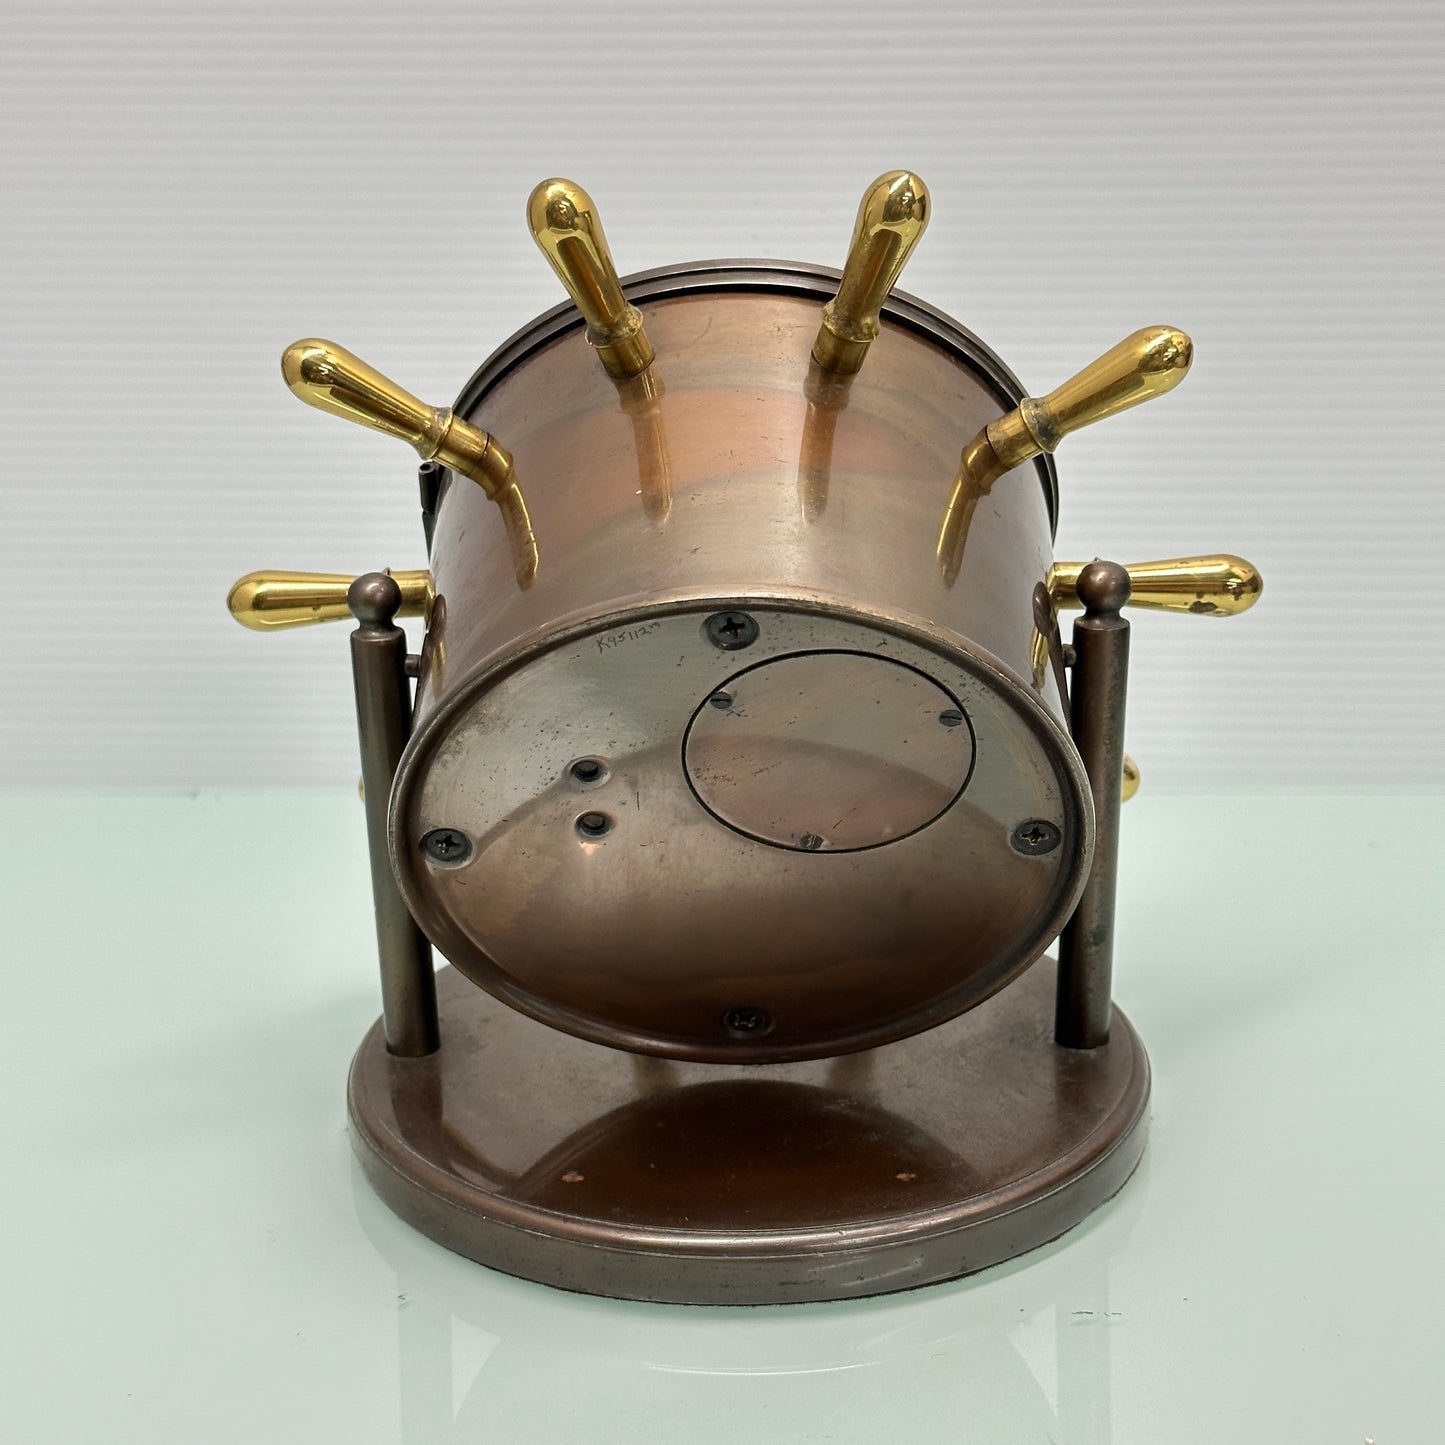 Chelsea Clock Co. - Vanderbilt - Bronze and Brass Gimbal Desk Ships Bell Clock 4”